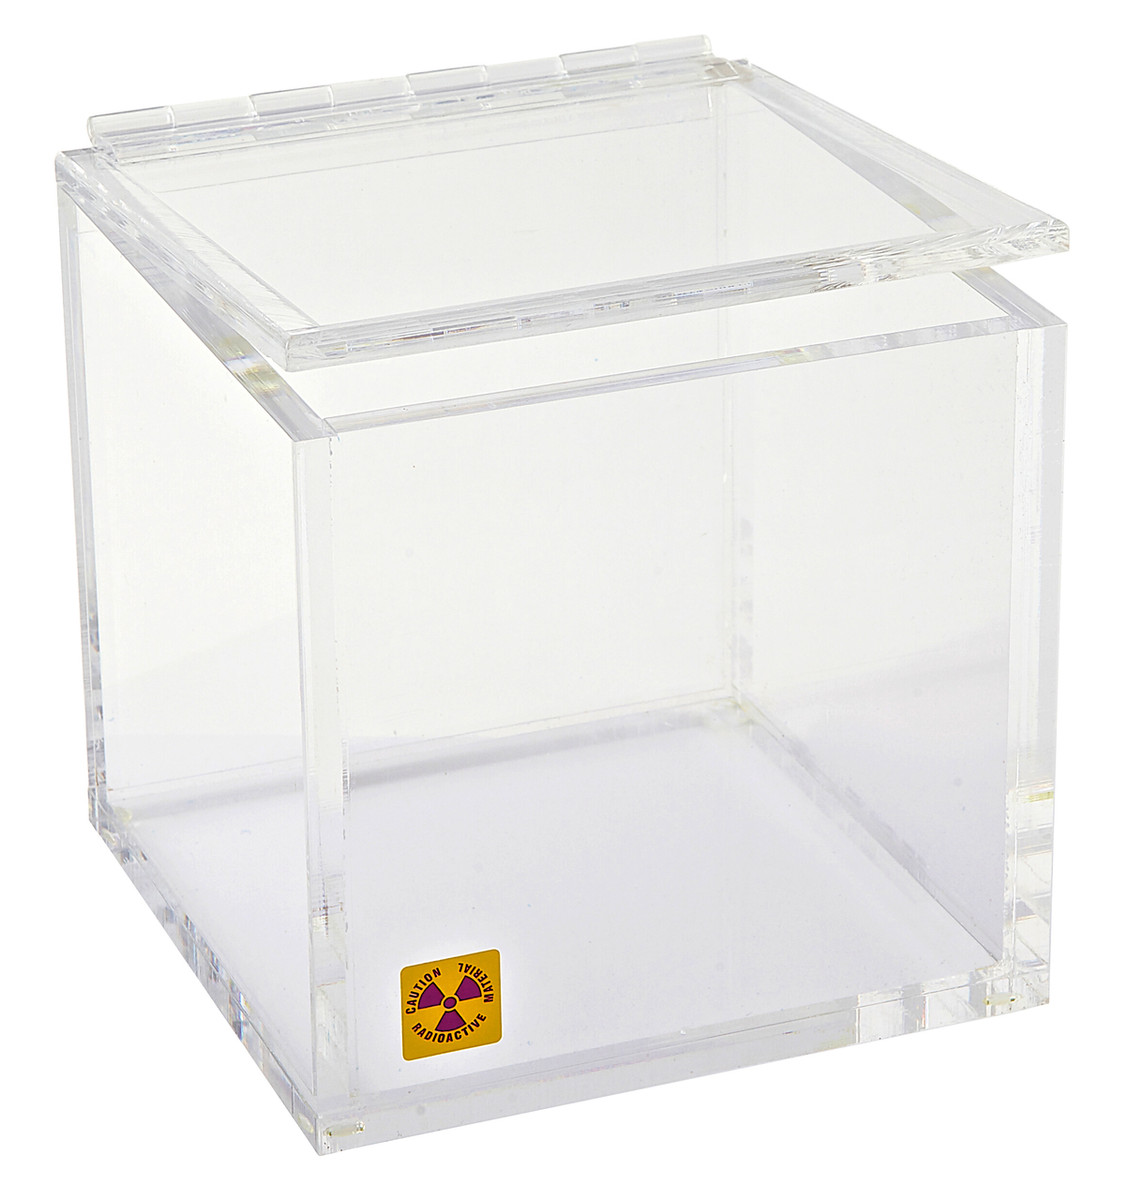 Beta Waste Bin and Storage Box for Radioactive Material, 6